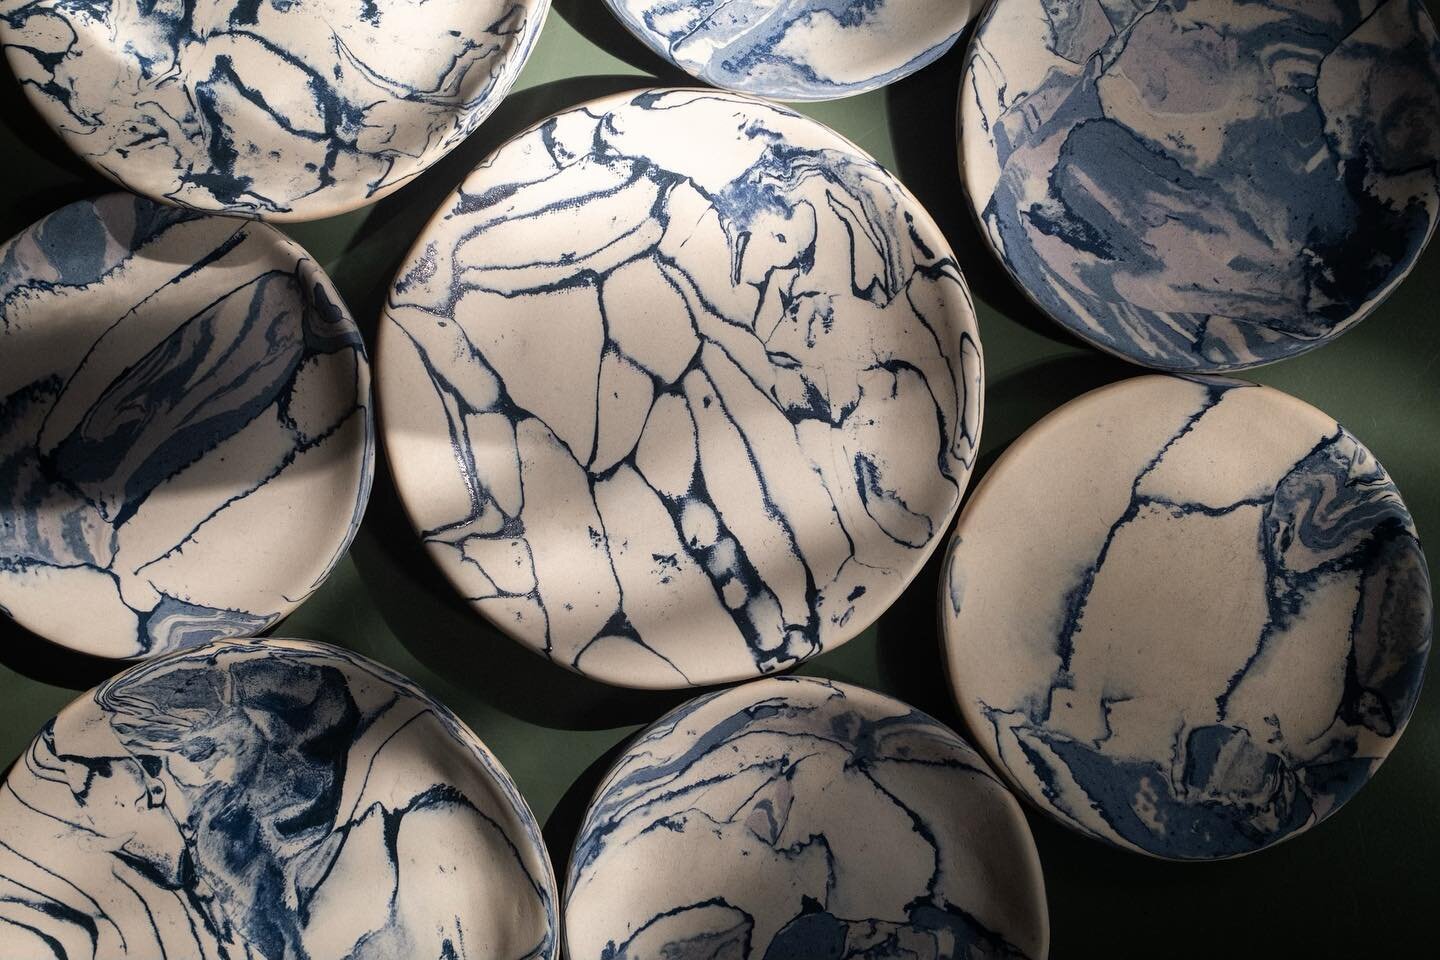 porcelain nerikomi ring dishes
only at secondpsyche.com
.
#ceramics #nerikomi #porcelain #handbuilt #interiordesign